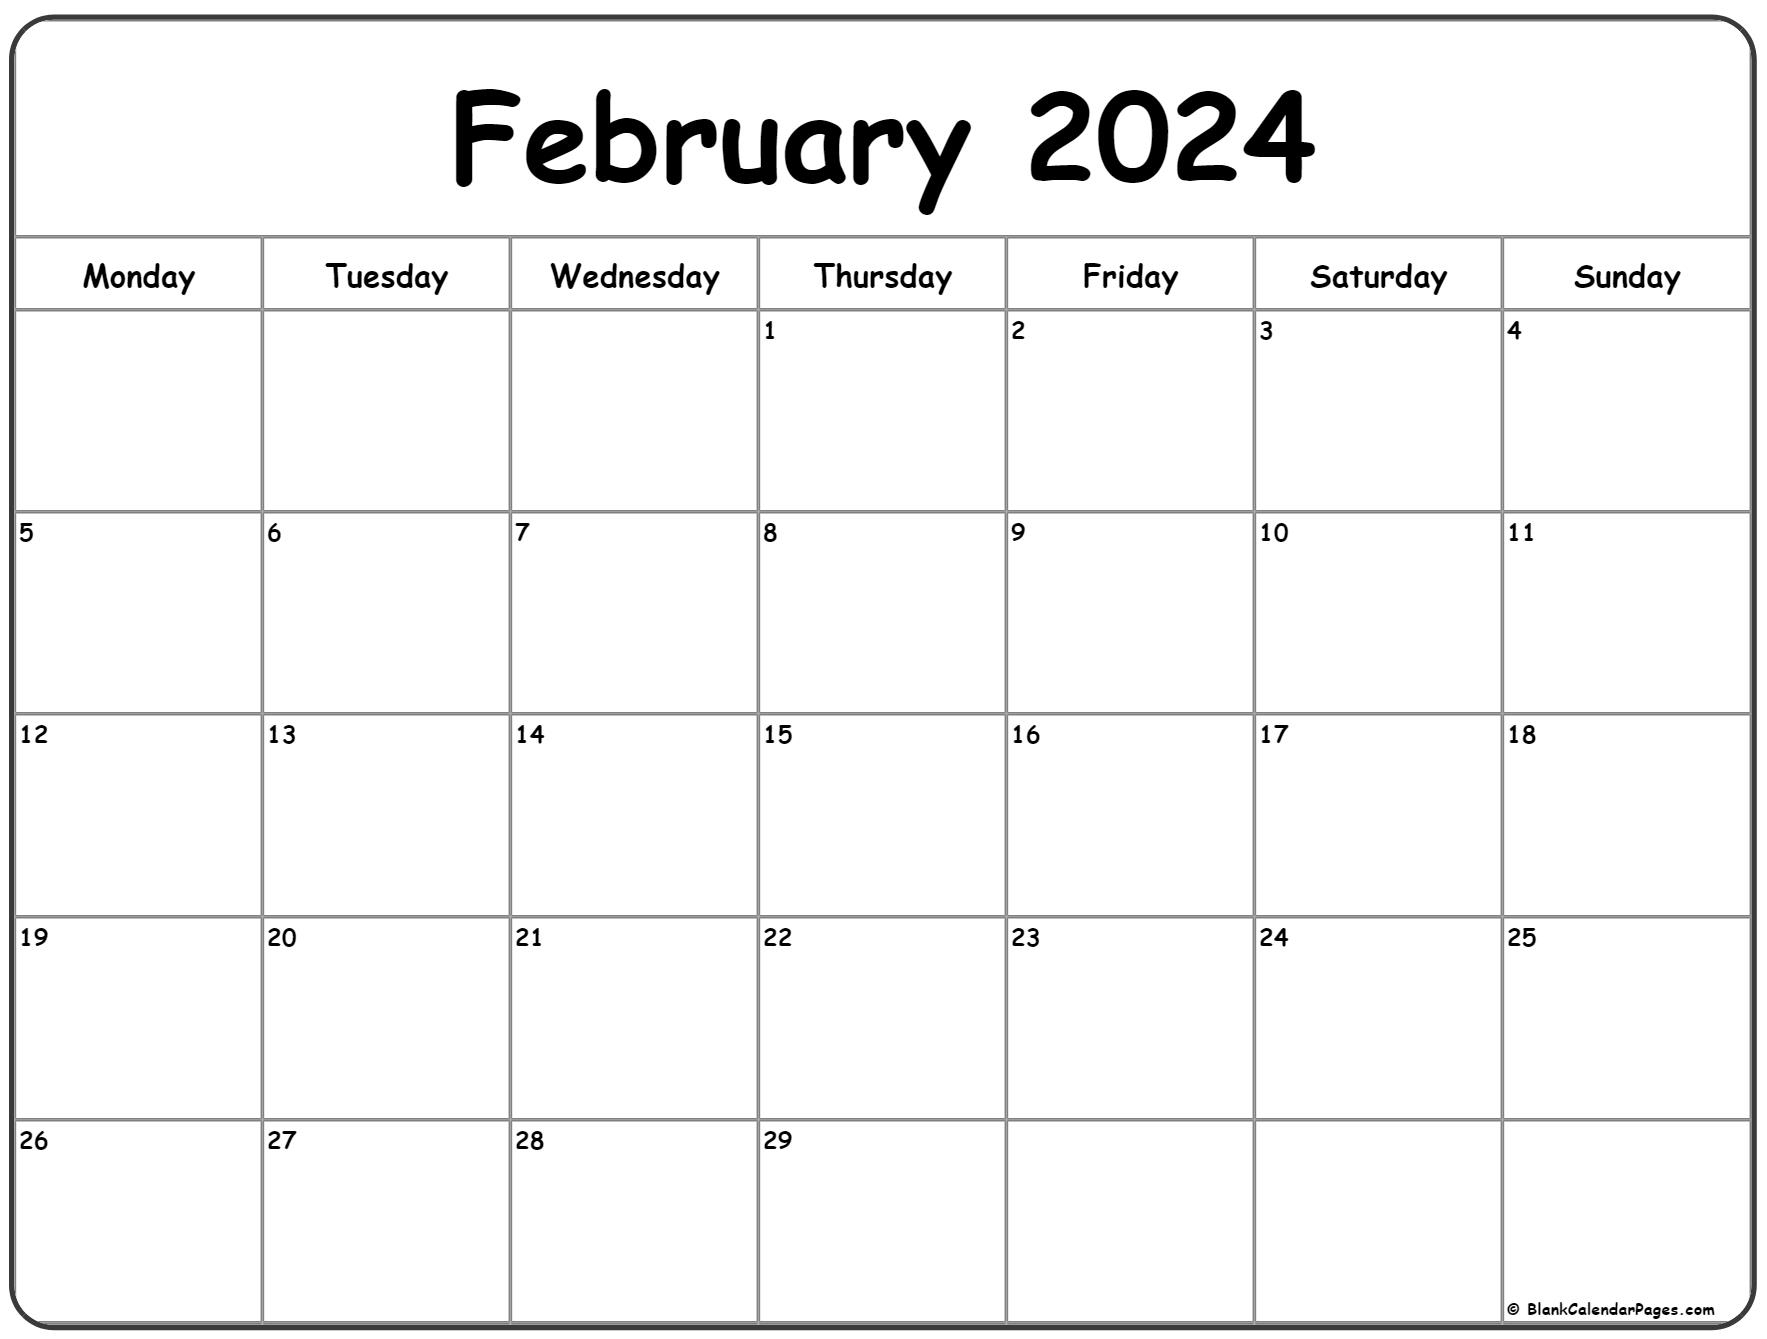 February 2024 Monday Calendar | Monday To Sunday for Free Feb 2024 Printable Calendar